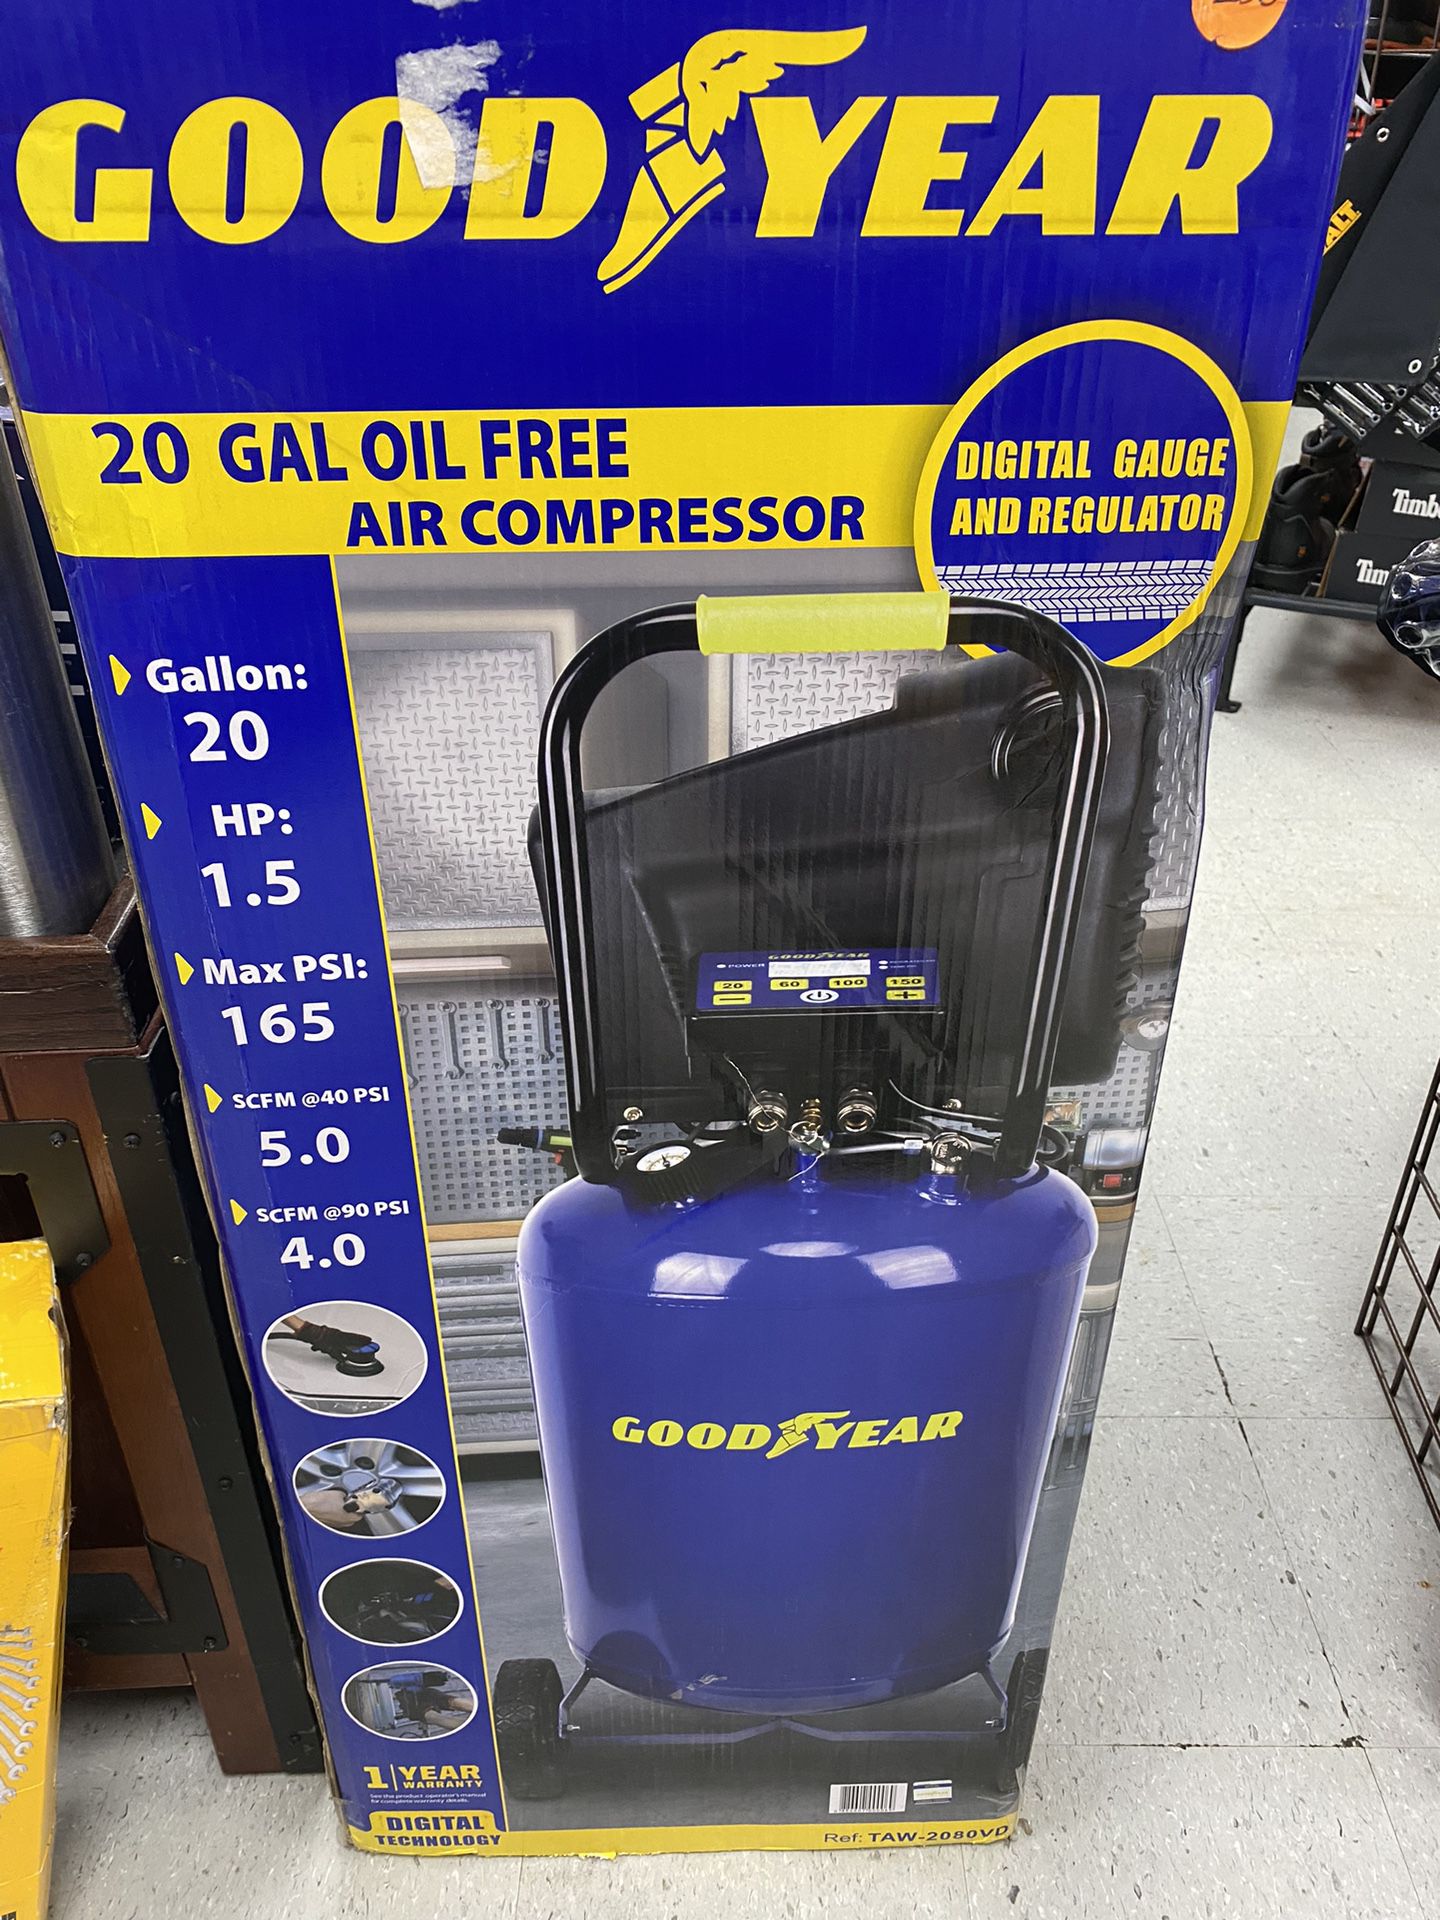 Good Year 20 Gal Oil Free Air Compressor 